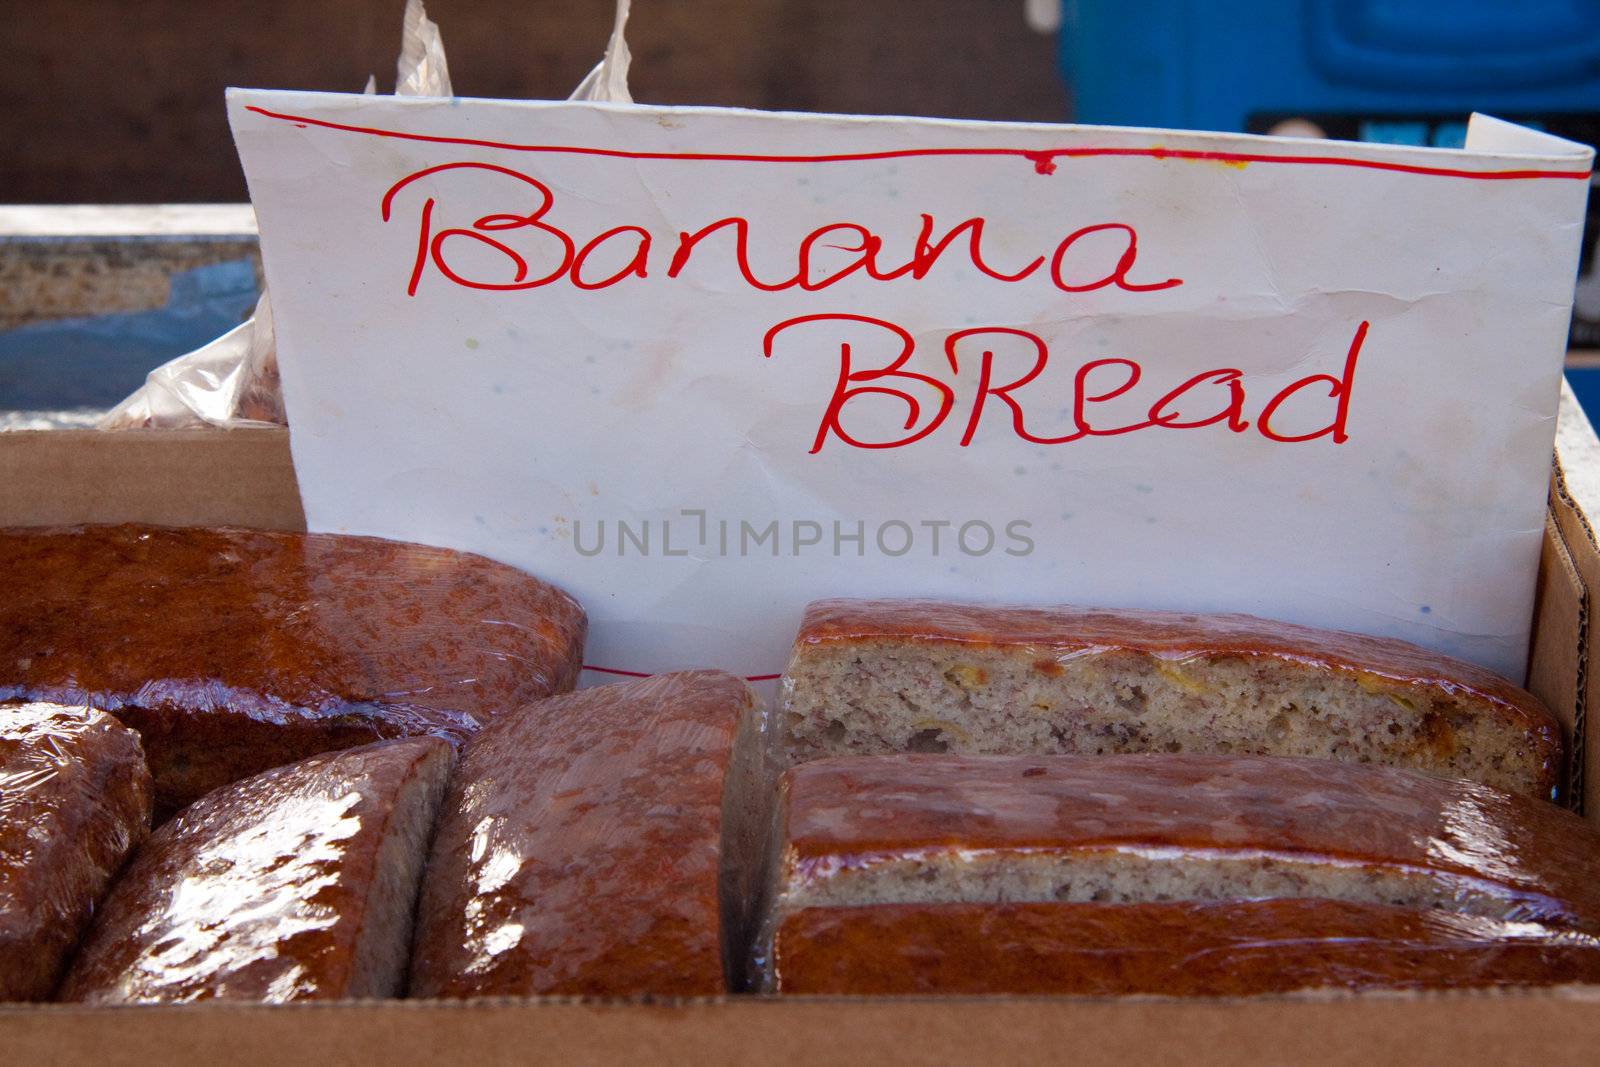 A farmer's market is selling hawaiian banana bread made from organic bananas on the north shore of oahu hawaii.